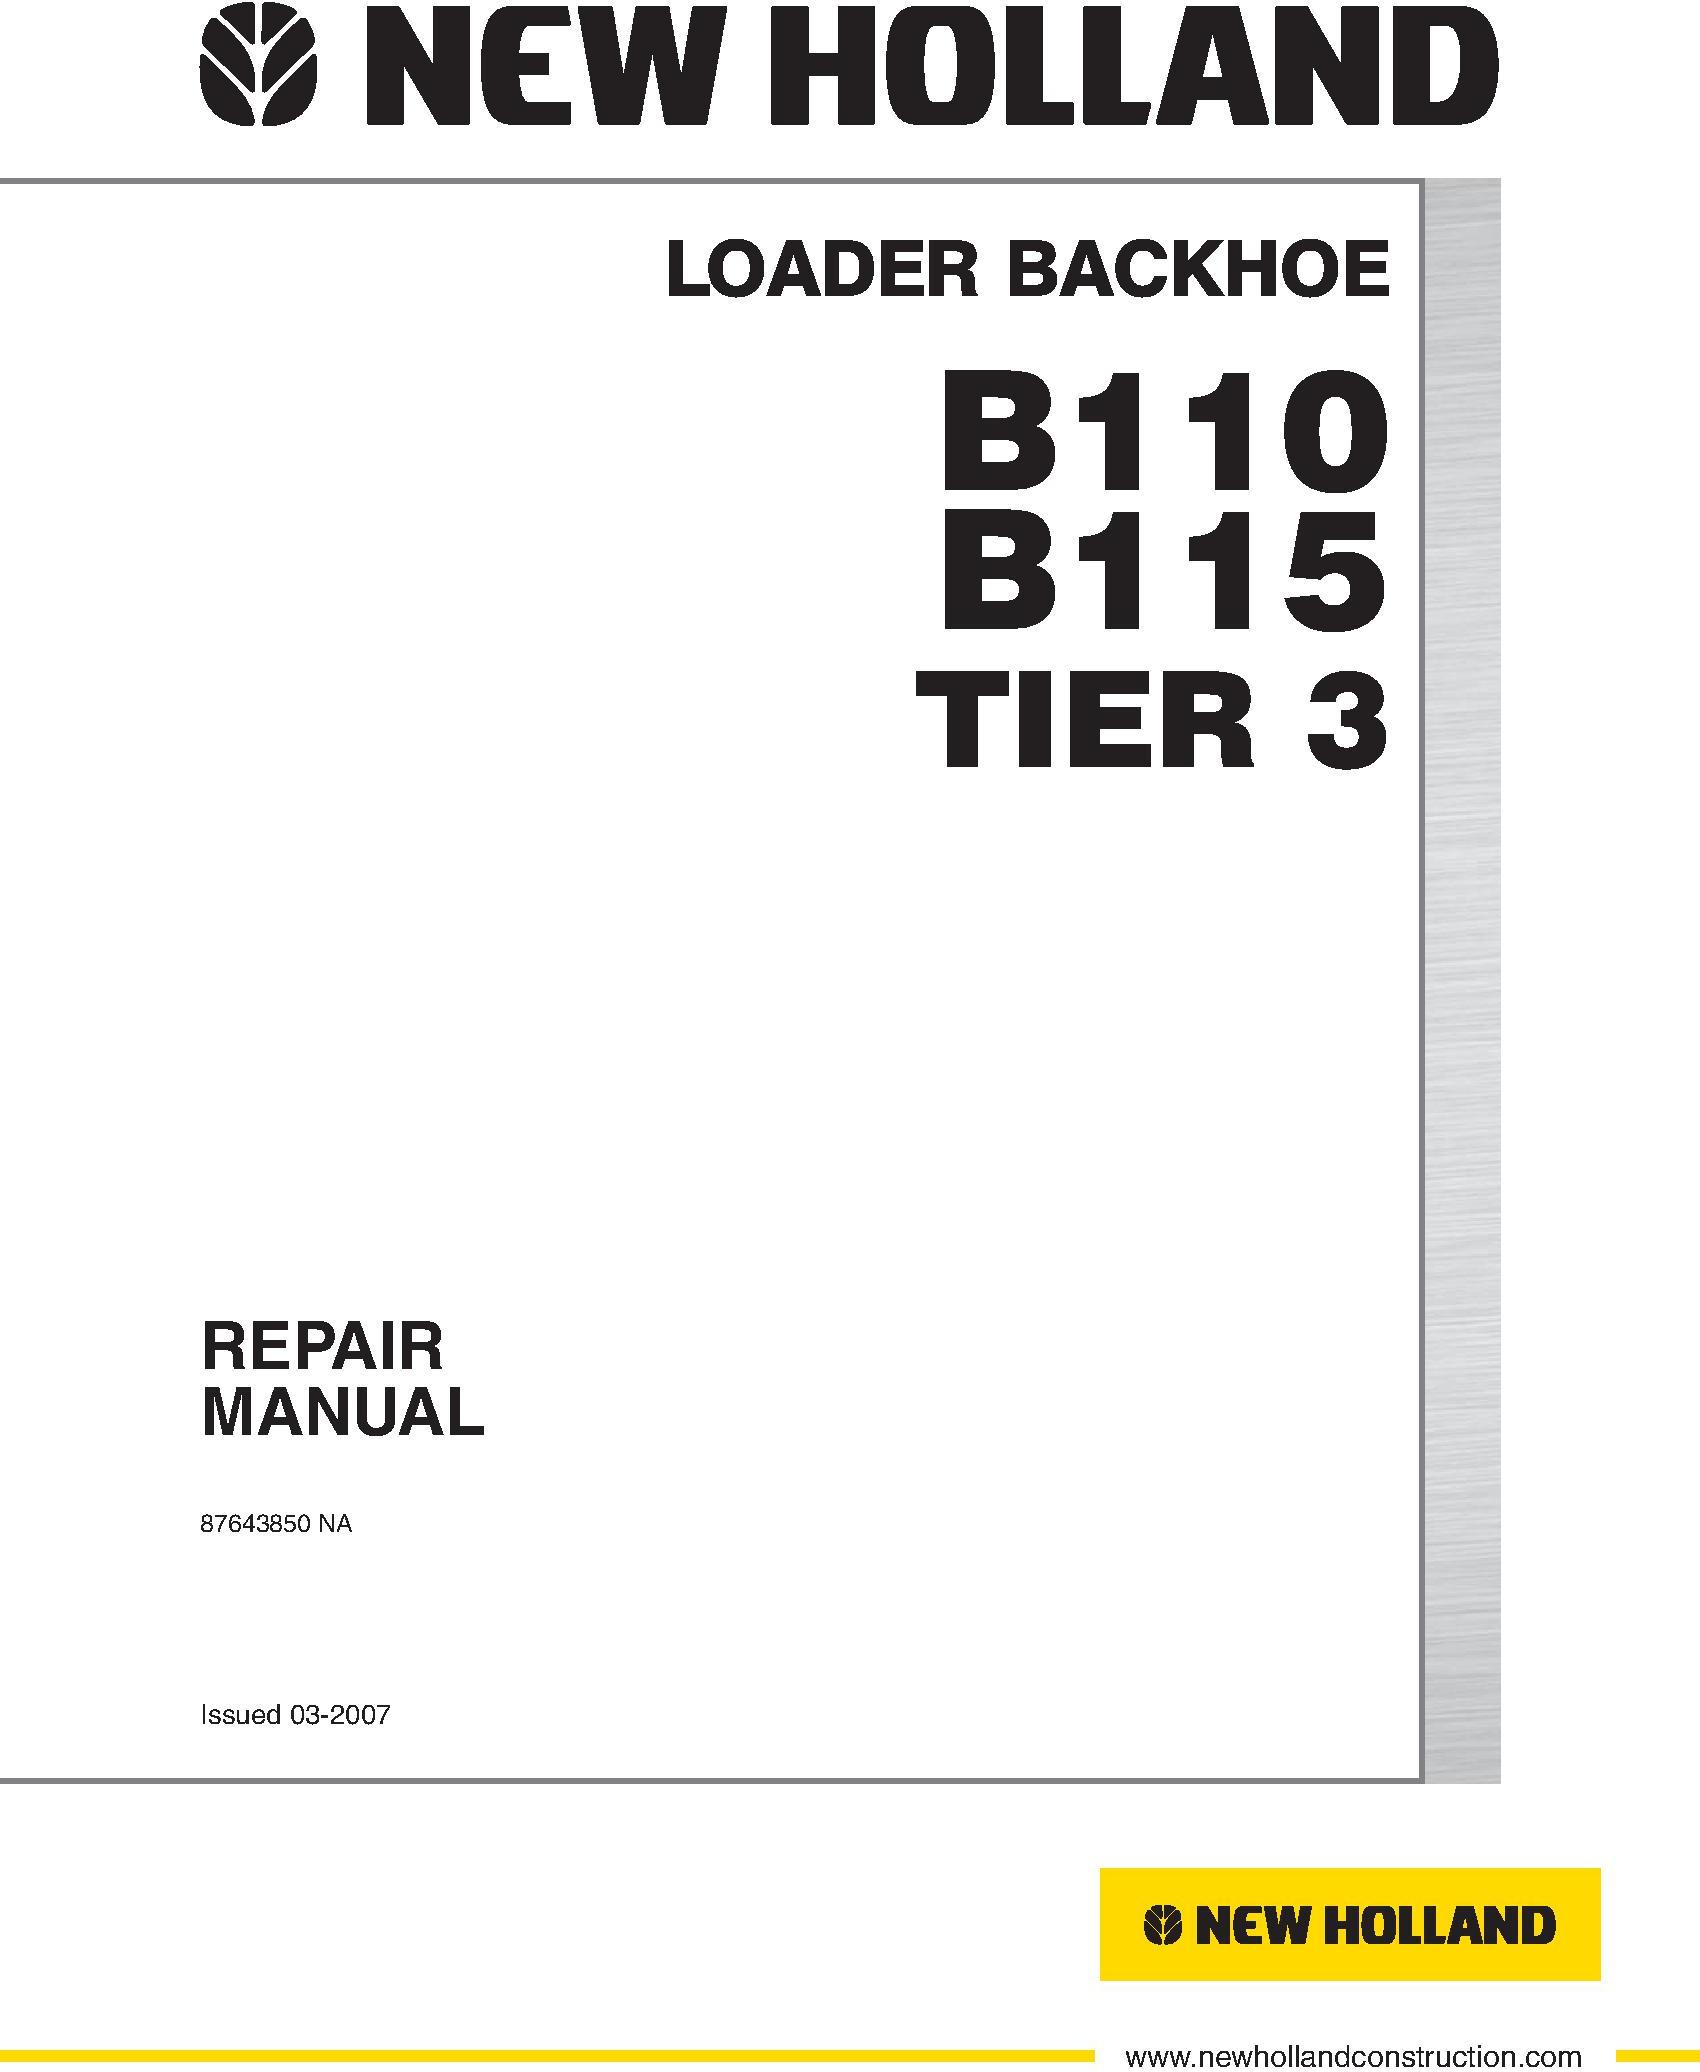 New Holland B110, B115 Tier 3 Loader Backhoe Service Manual - 19356